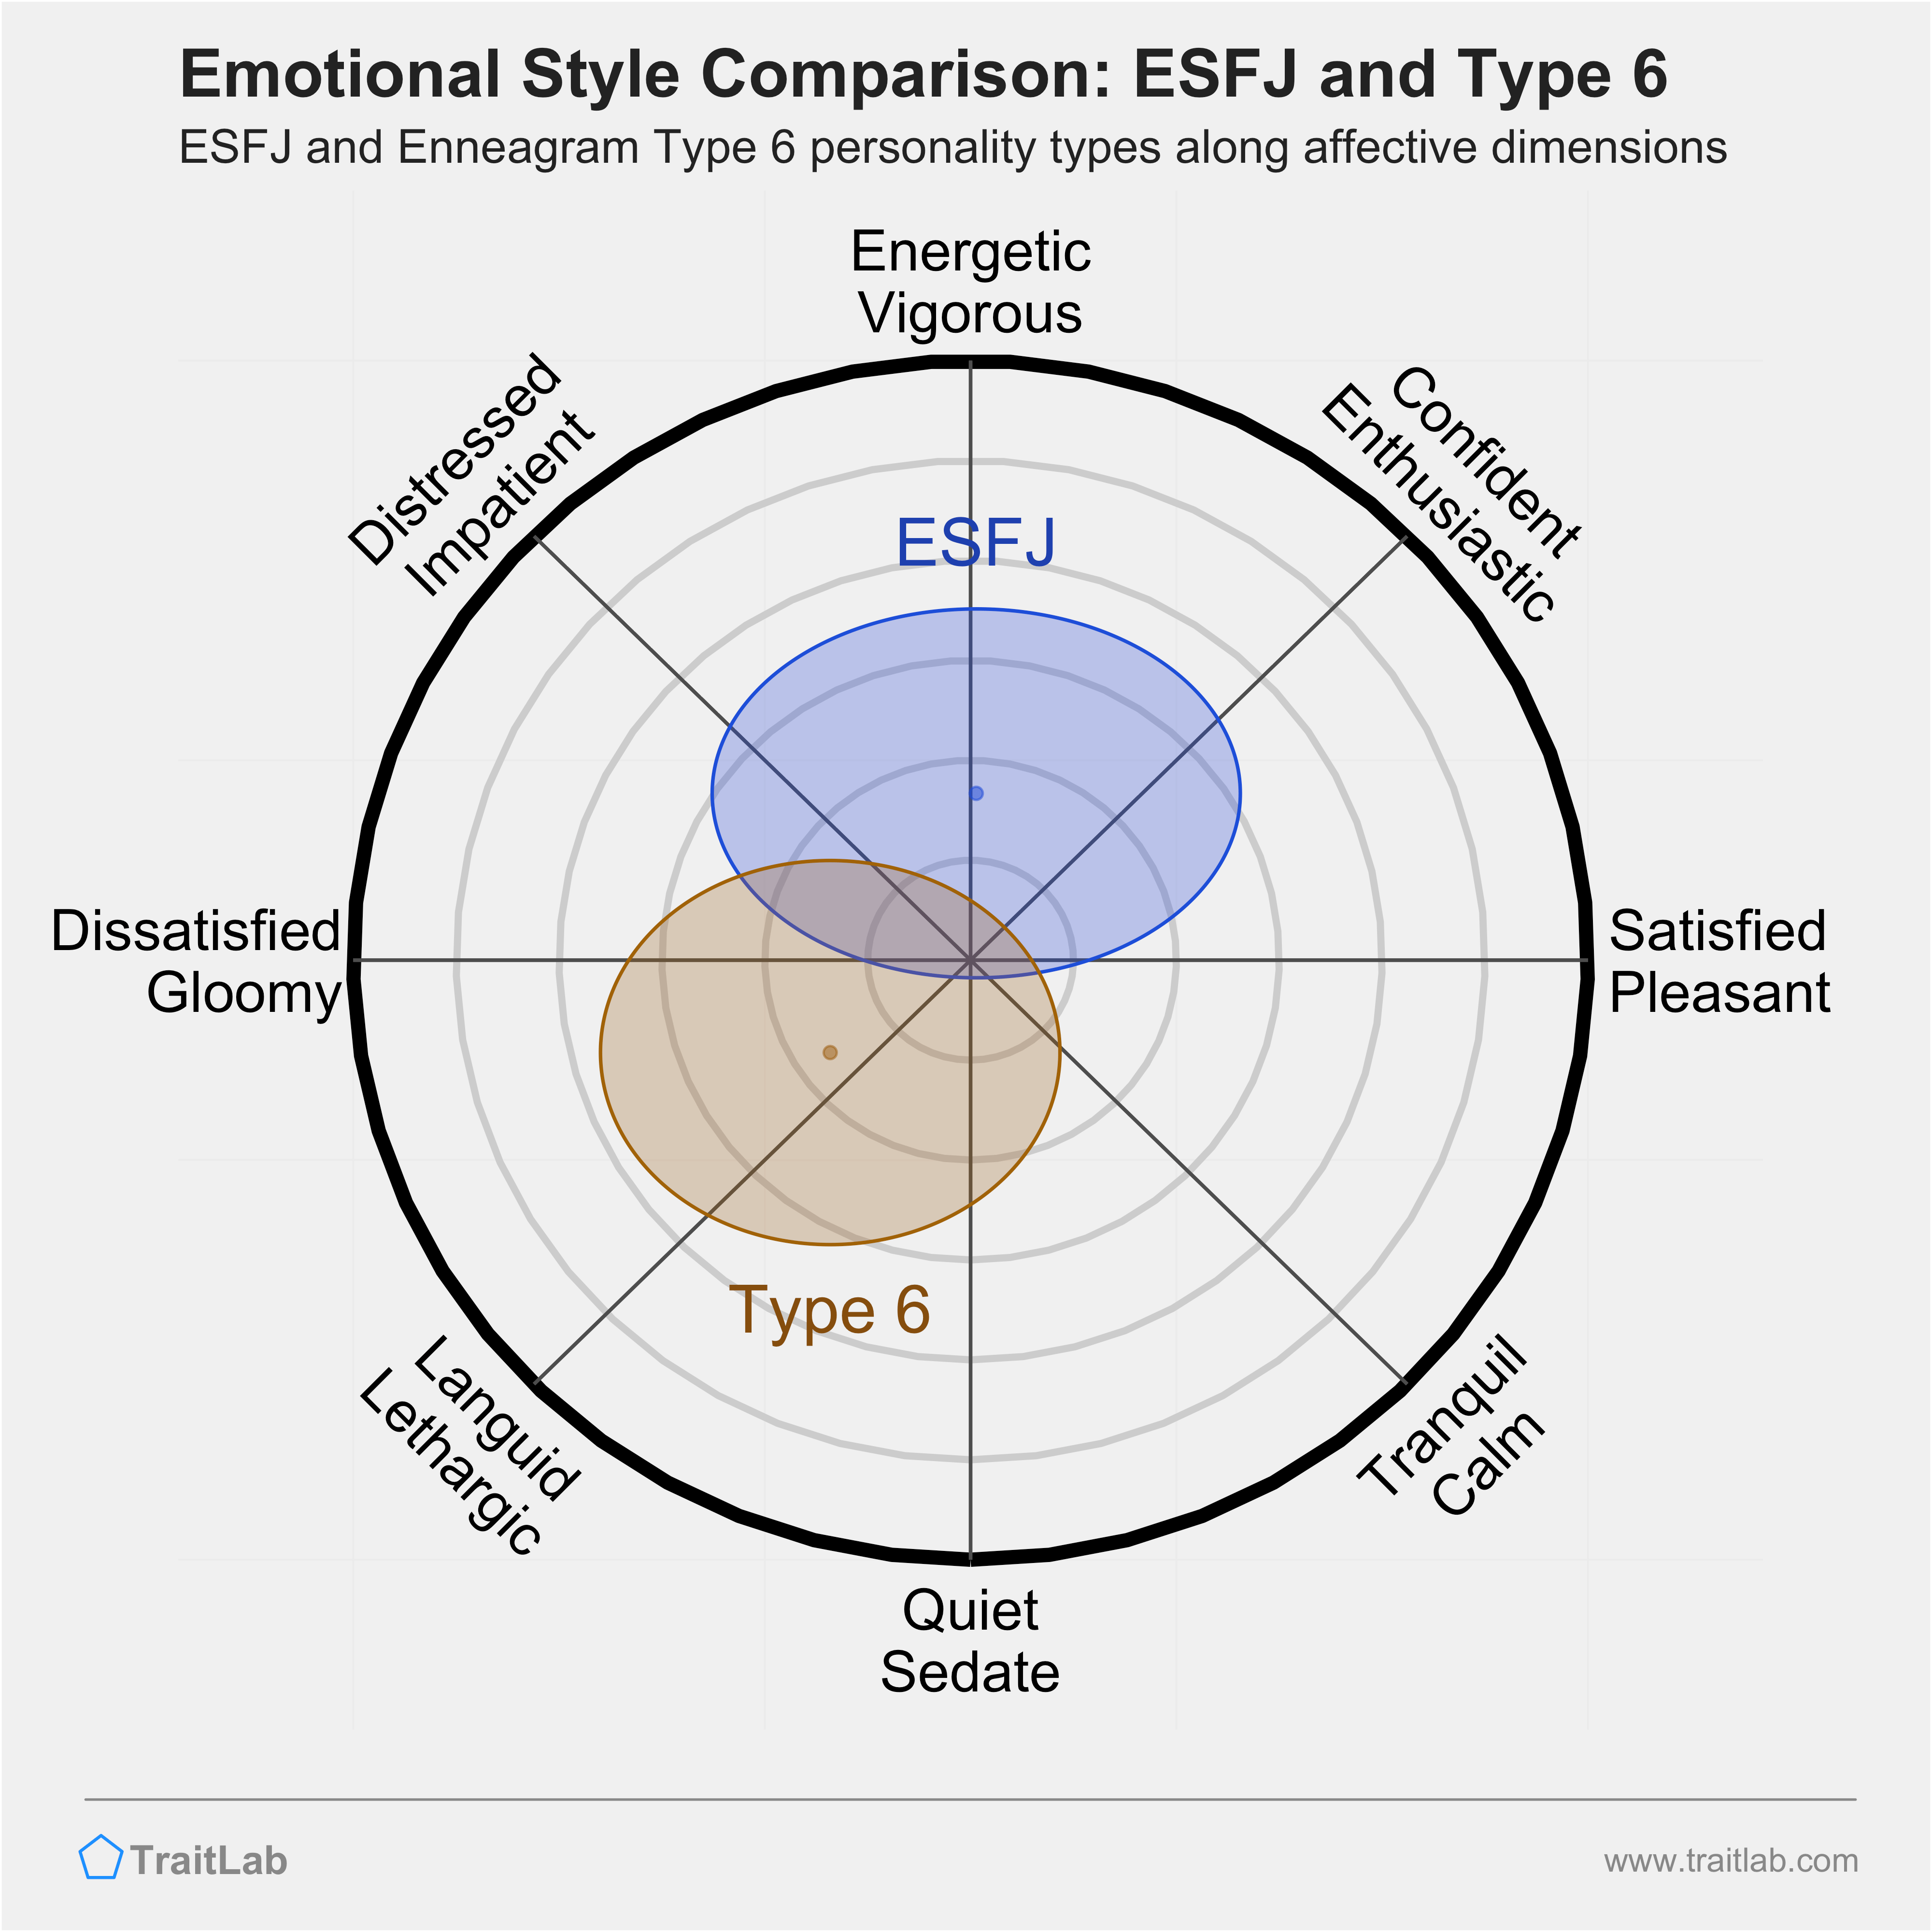 ESFJ and Type 6 comparison across emotional (affective) dimensions